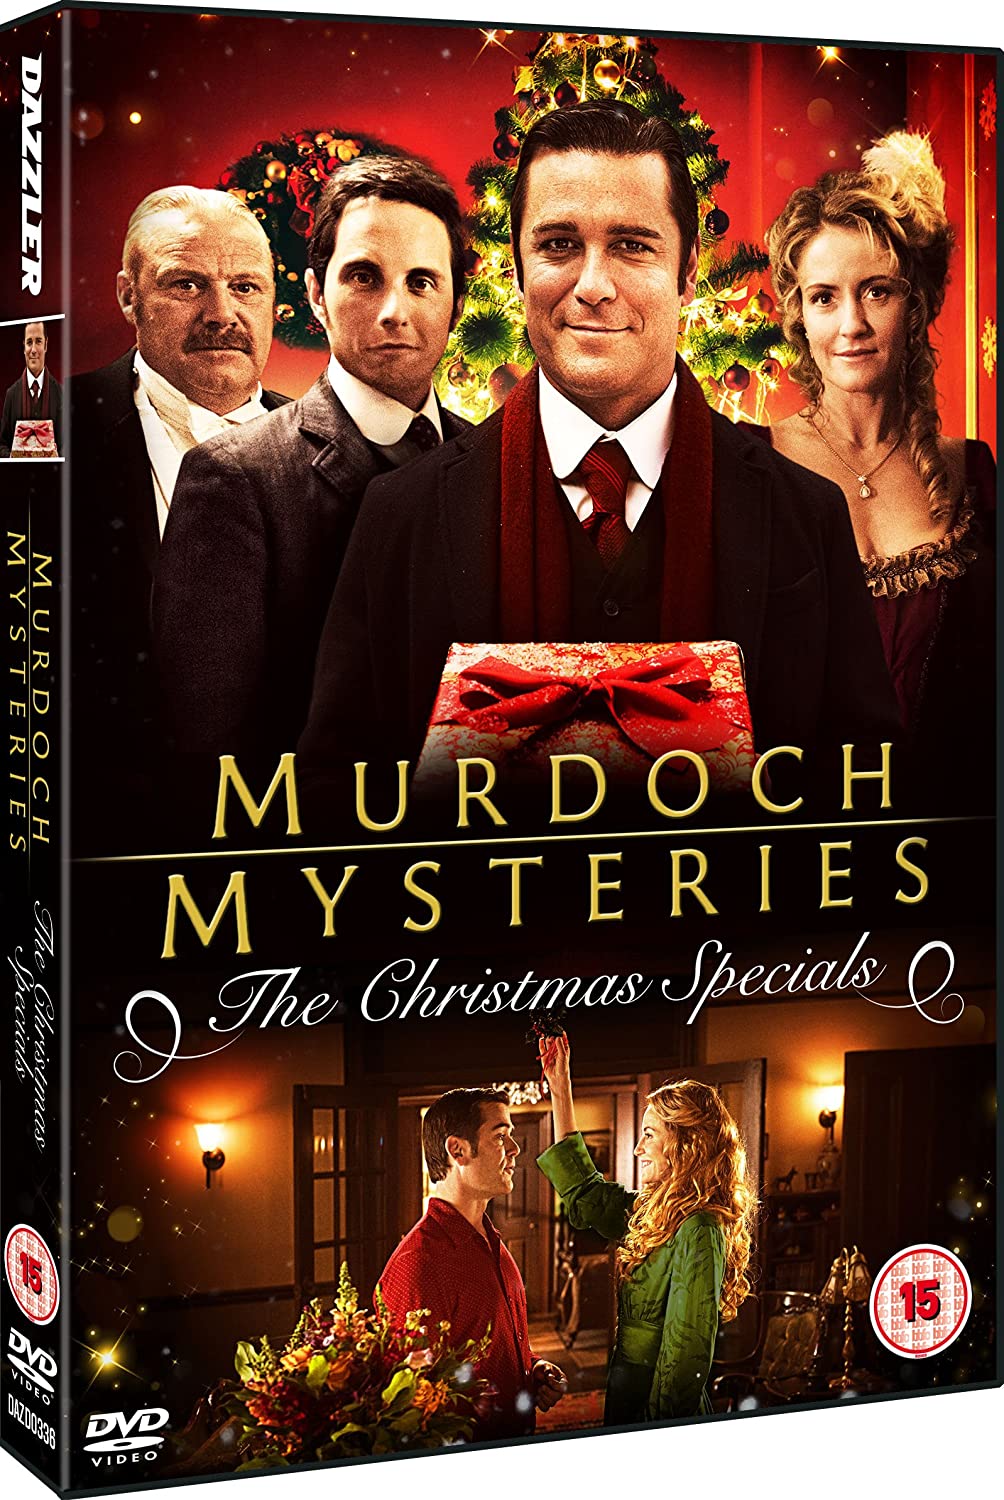 Murdoch Mysteries: The Christmas Specials – Drama/Mystery [DVD]